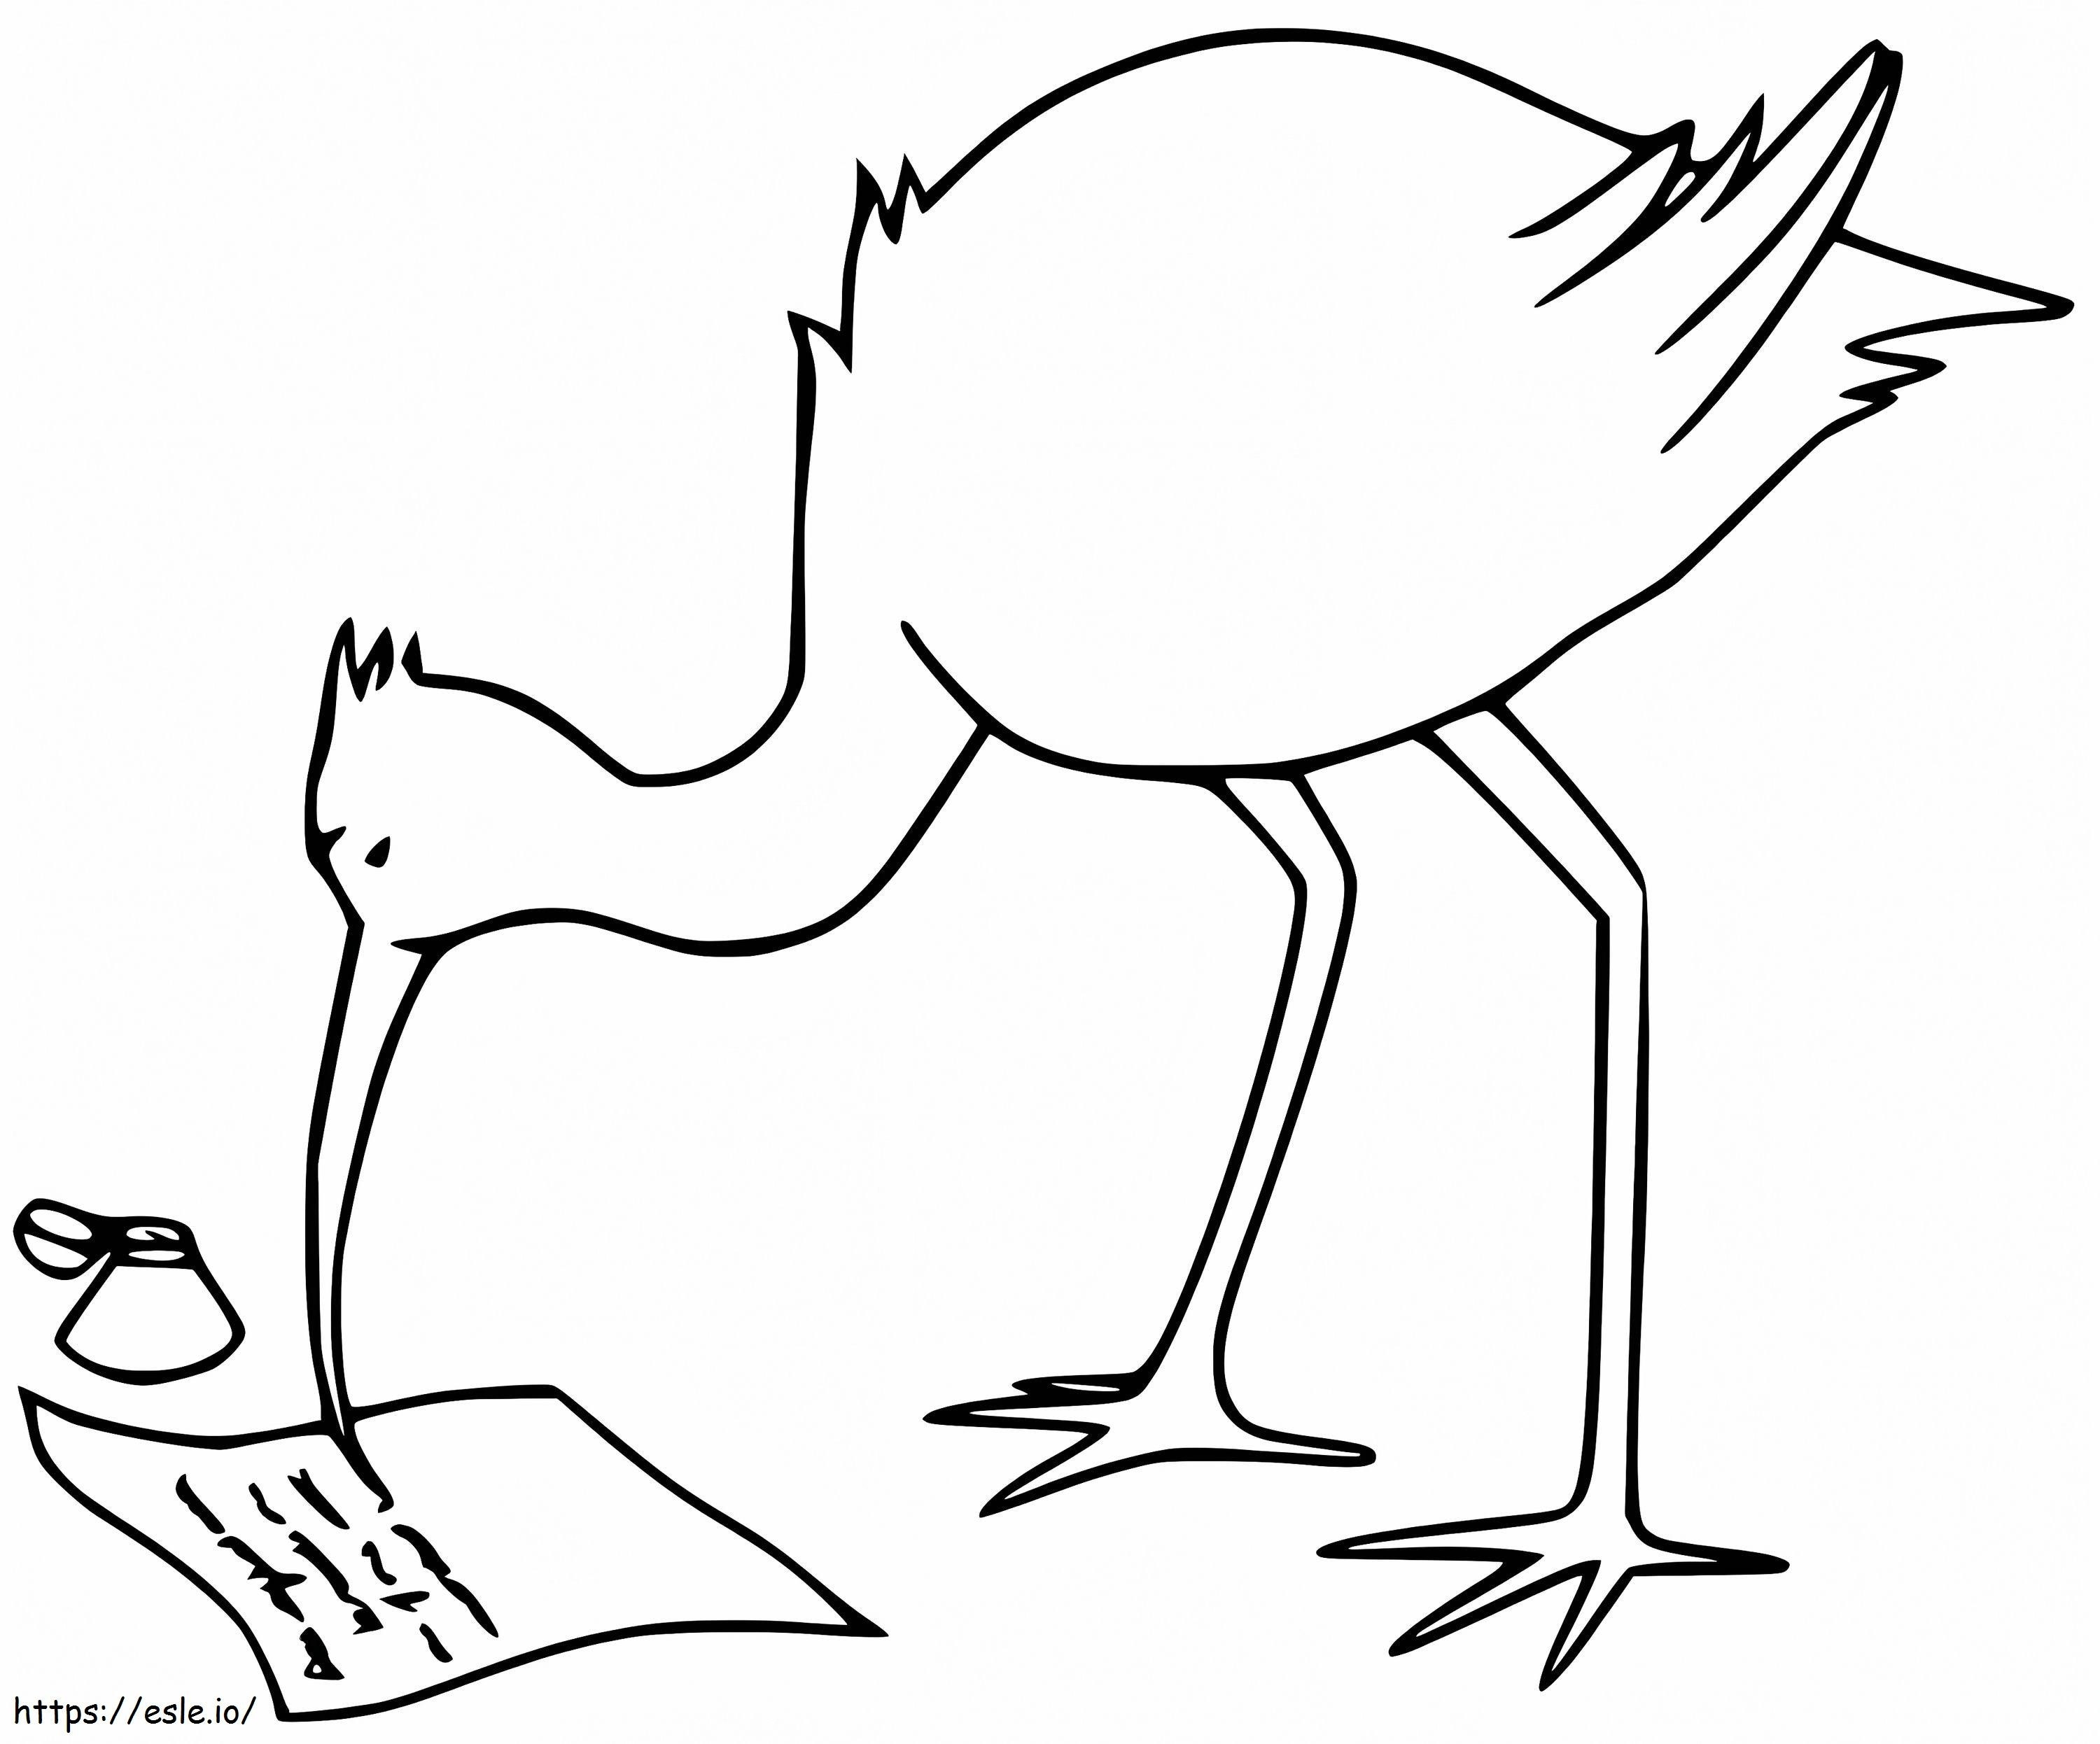 Ibis Writing coloring page